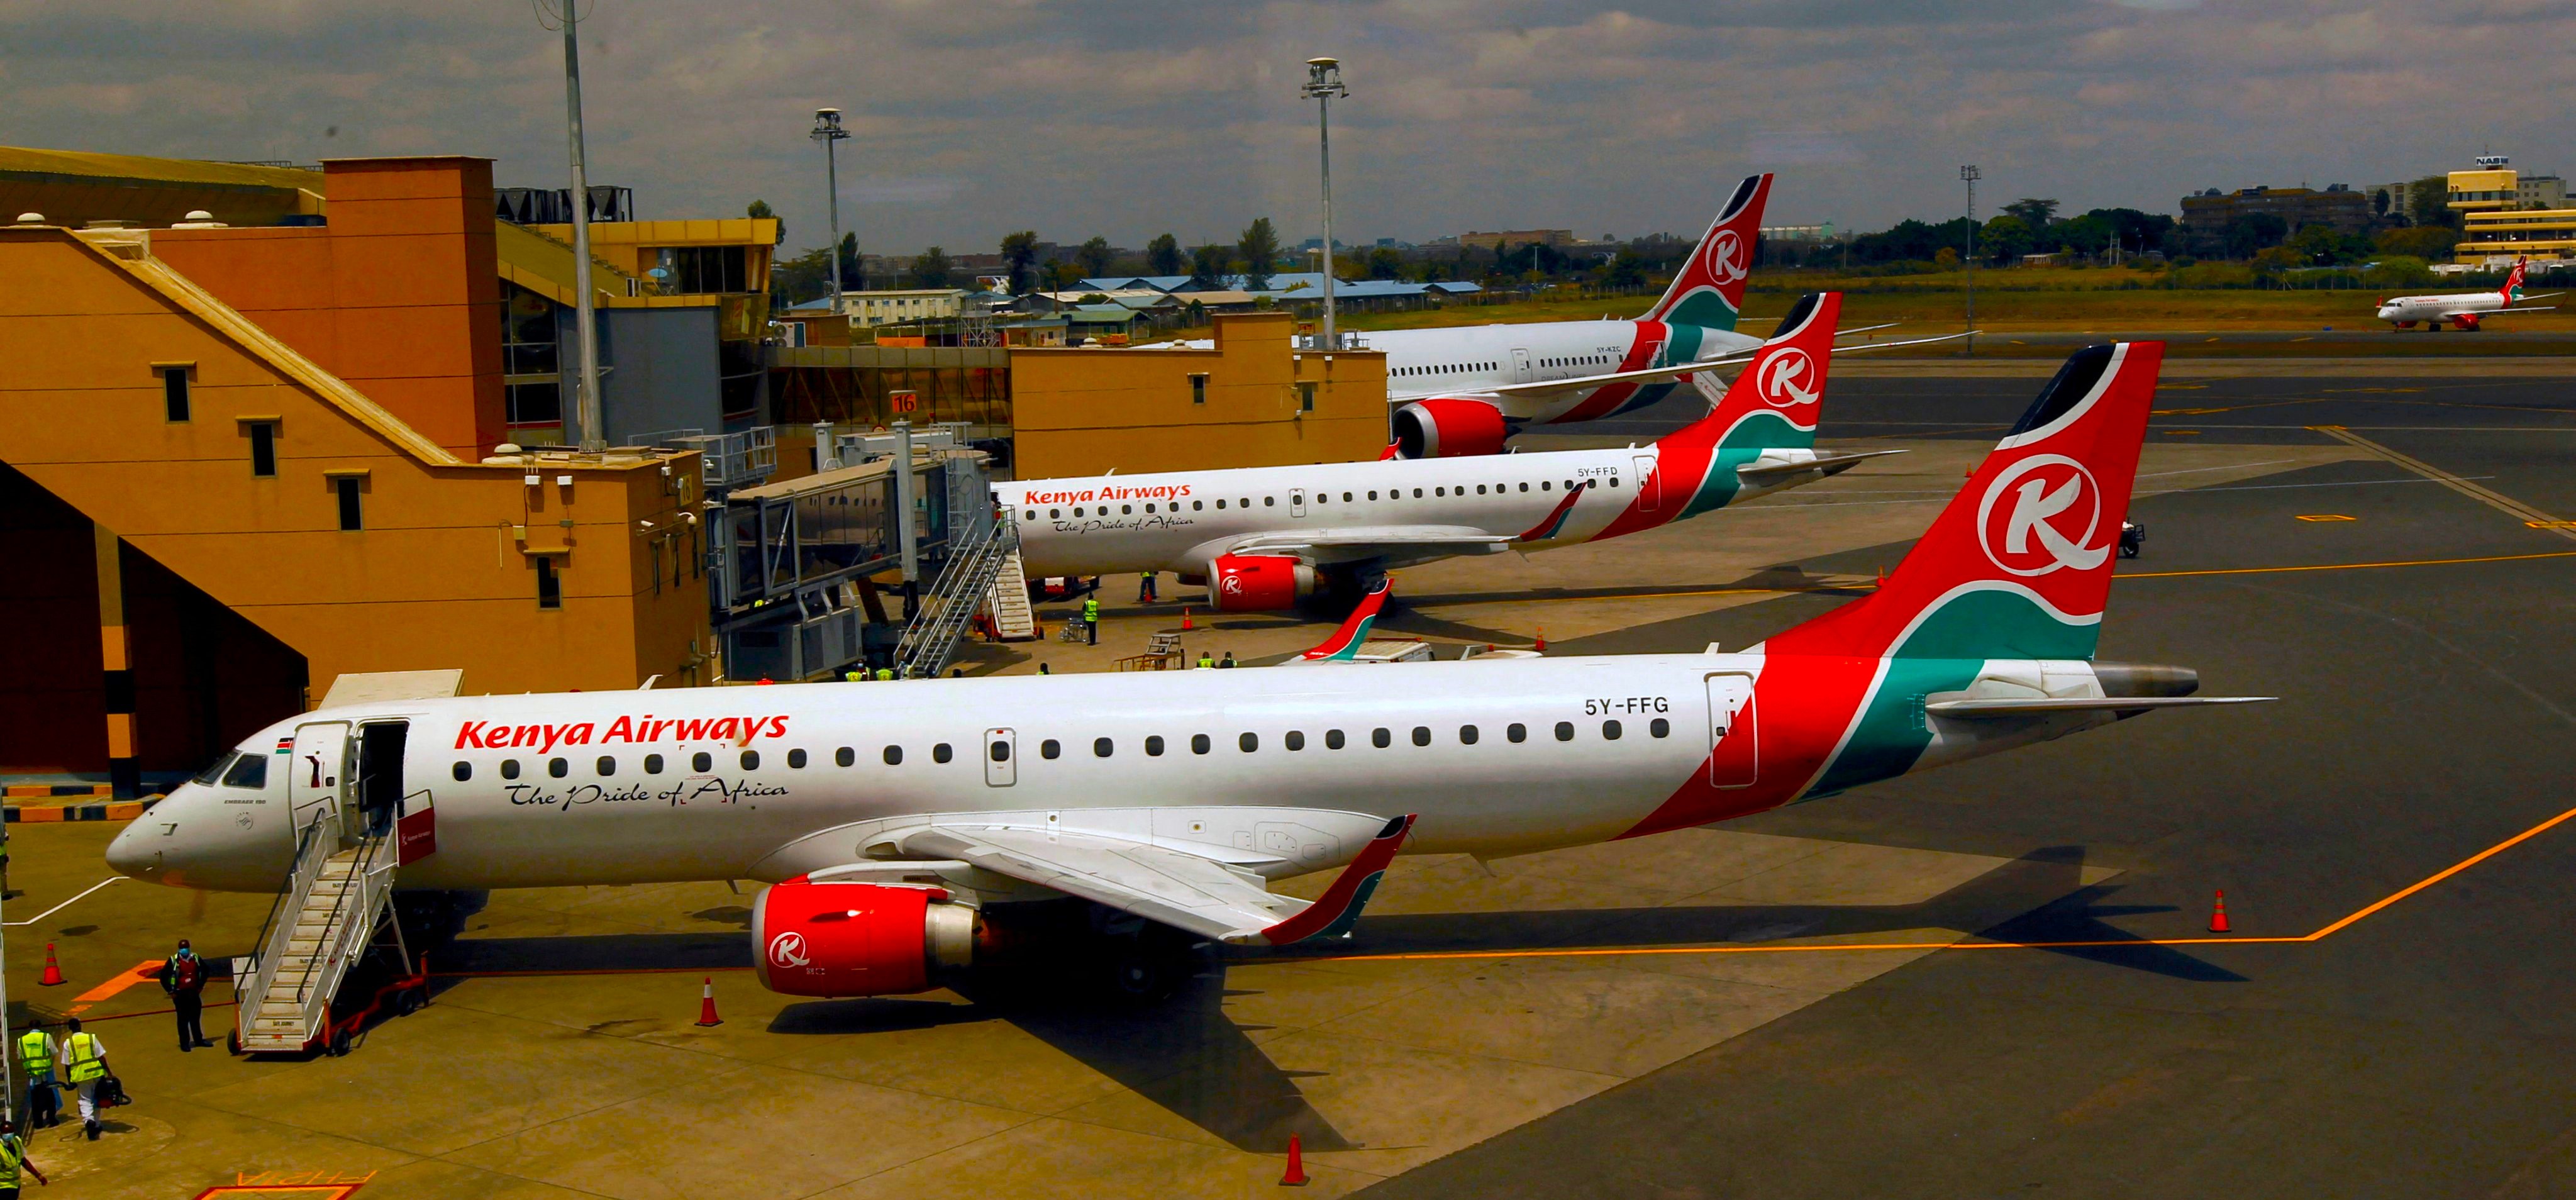 Tanzania Civil Aviation Authority has banned Kenya Airways from operating flights between Nairobi and Dar es Salaam.